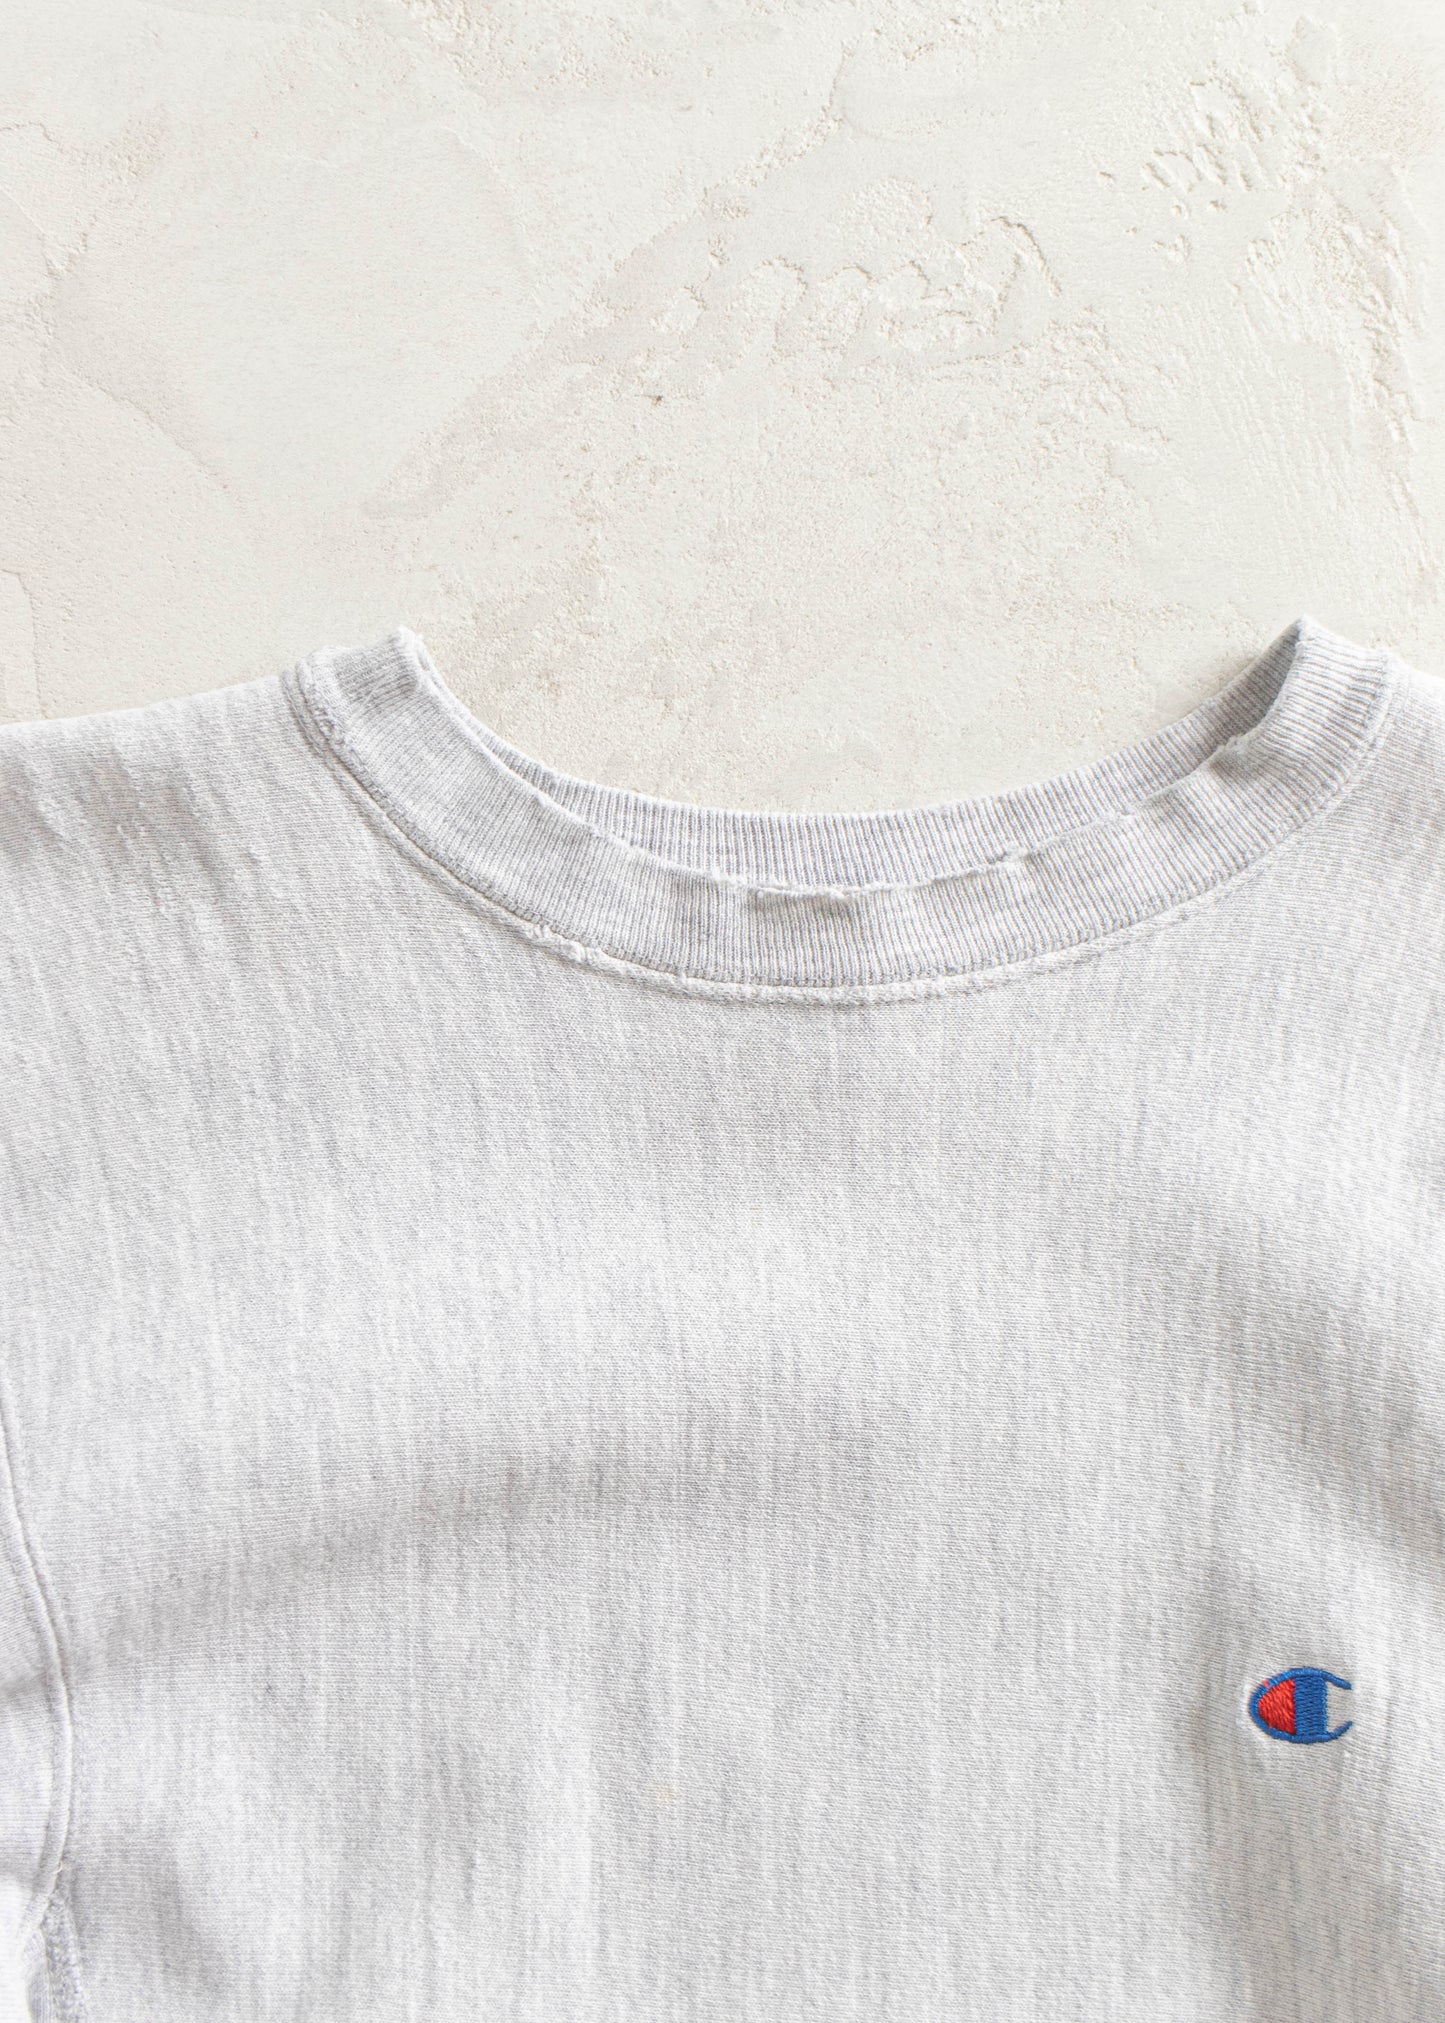 Vintage 1980s Champion Reverse Weave Warmup Grey Sweatshirt Size XS/S